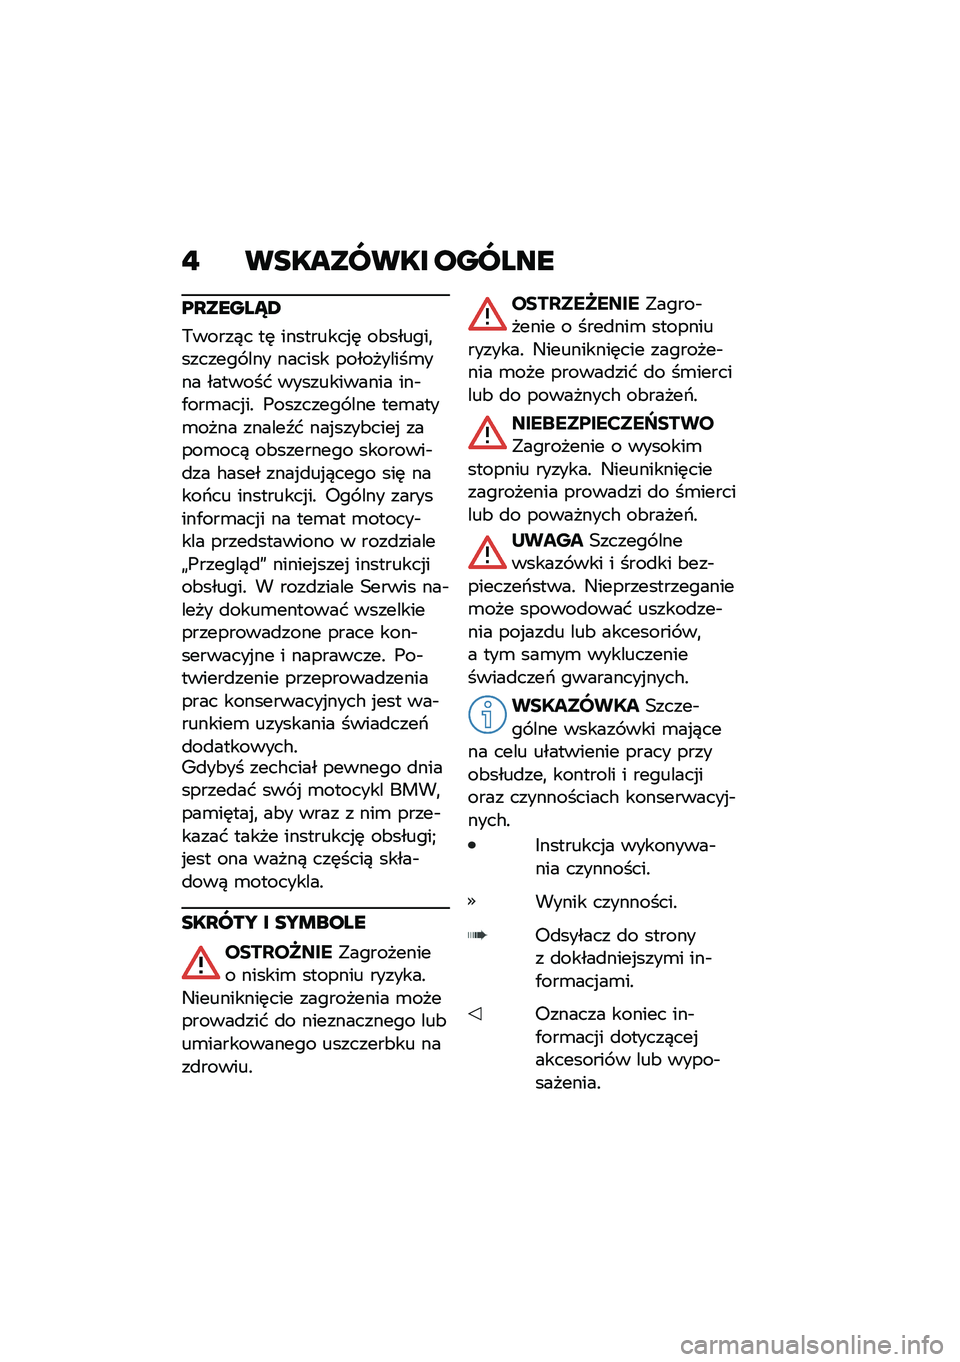 BMW MOTORRAD R 1250 RS 2020  Instrukcja obsługi (in Polish) �" ��������� ������
��K�����X�4
�,�����)� ��	 ���������%�	 ��&������
������� ��� ������ ����������\b��� ������� �������